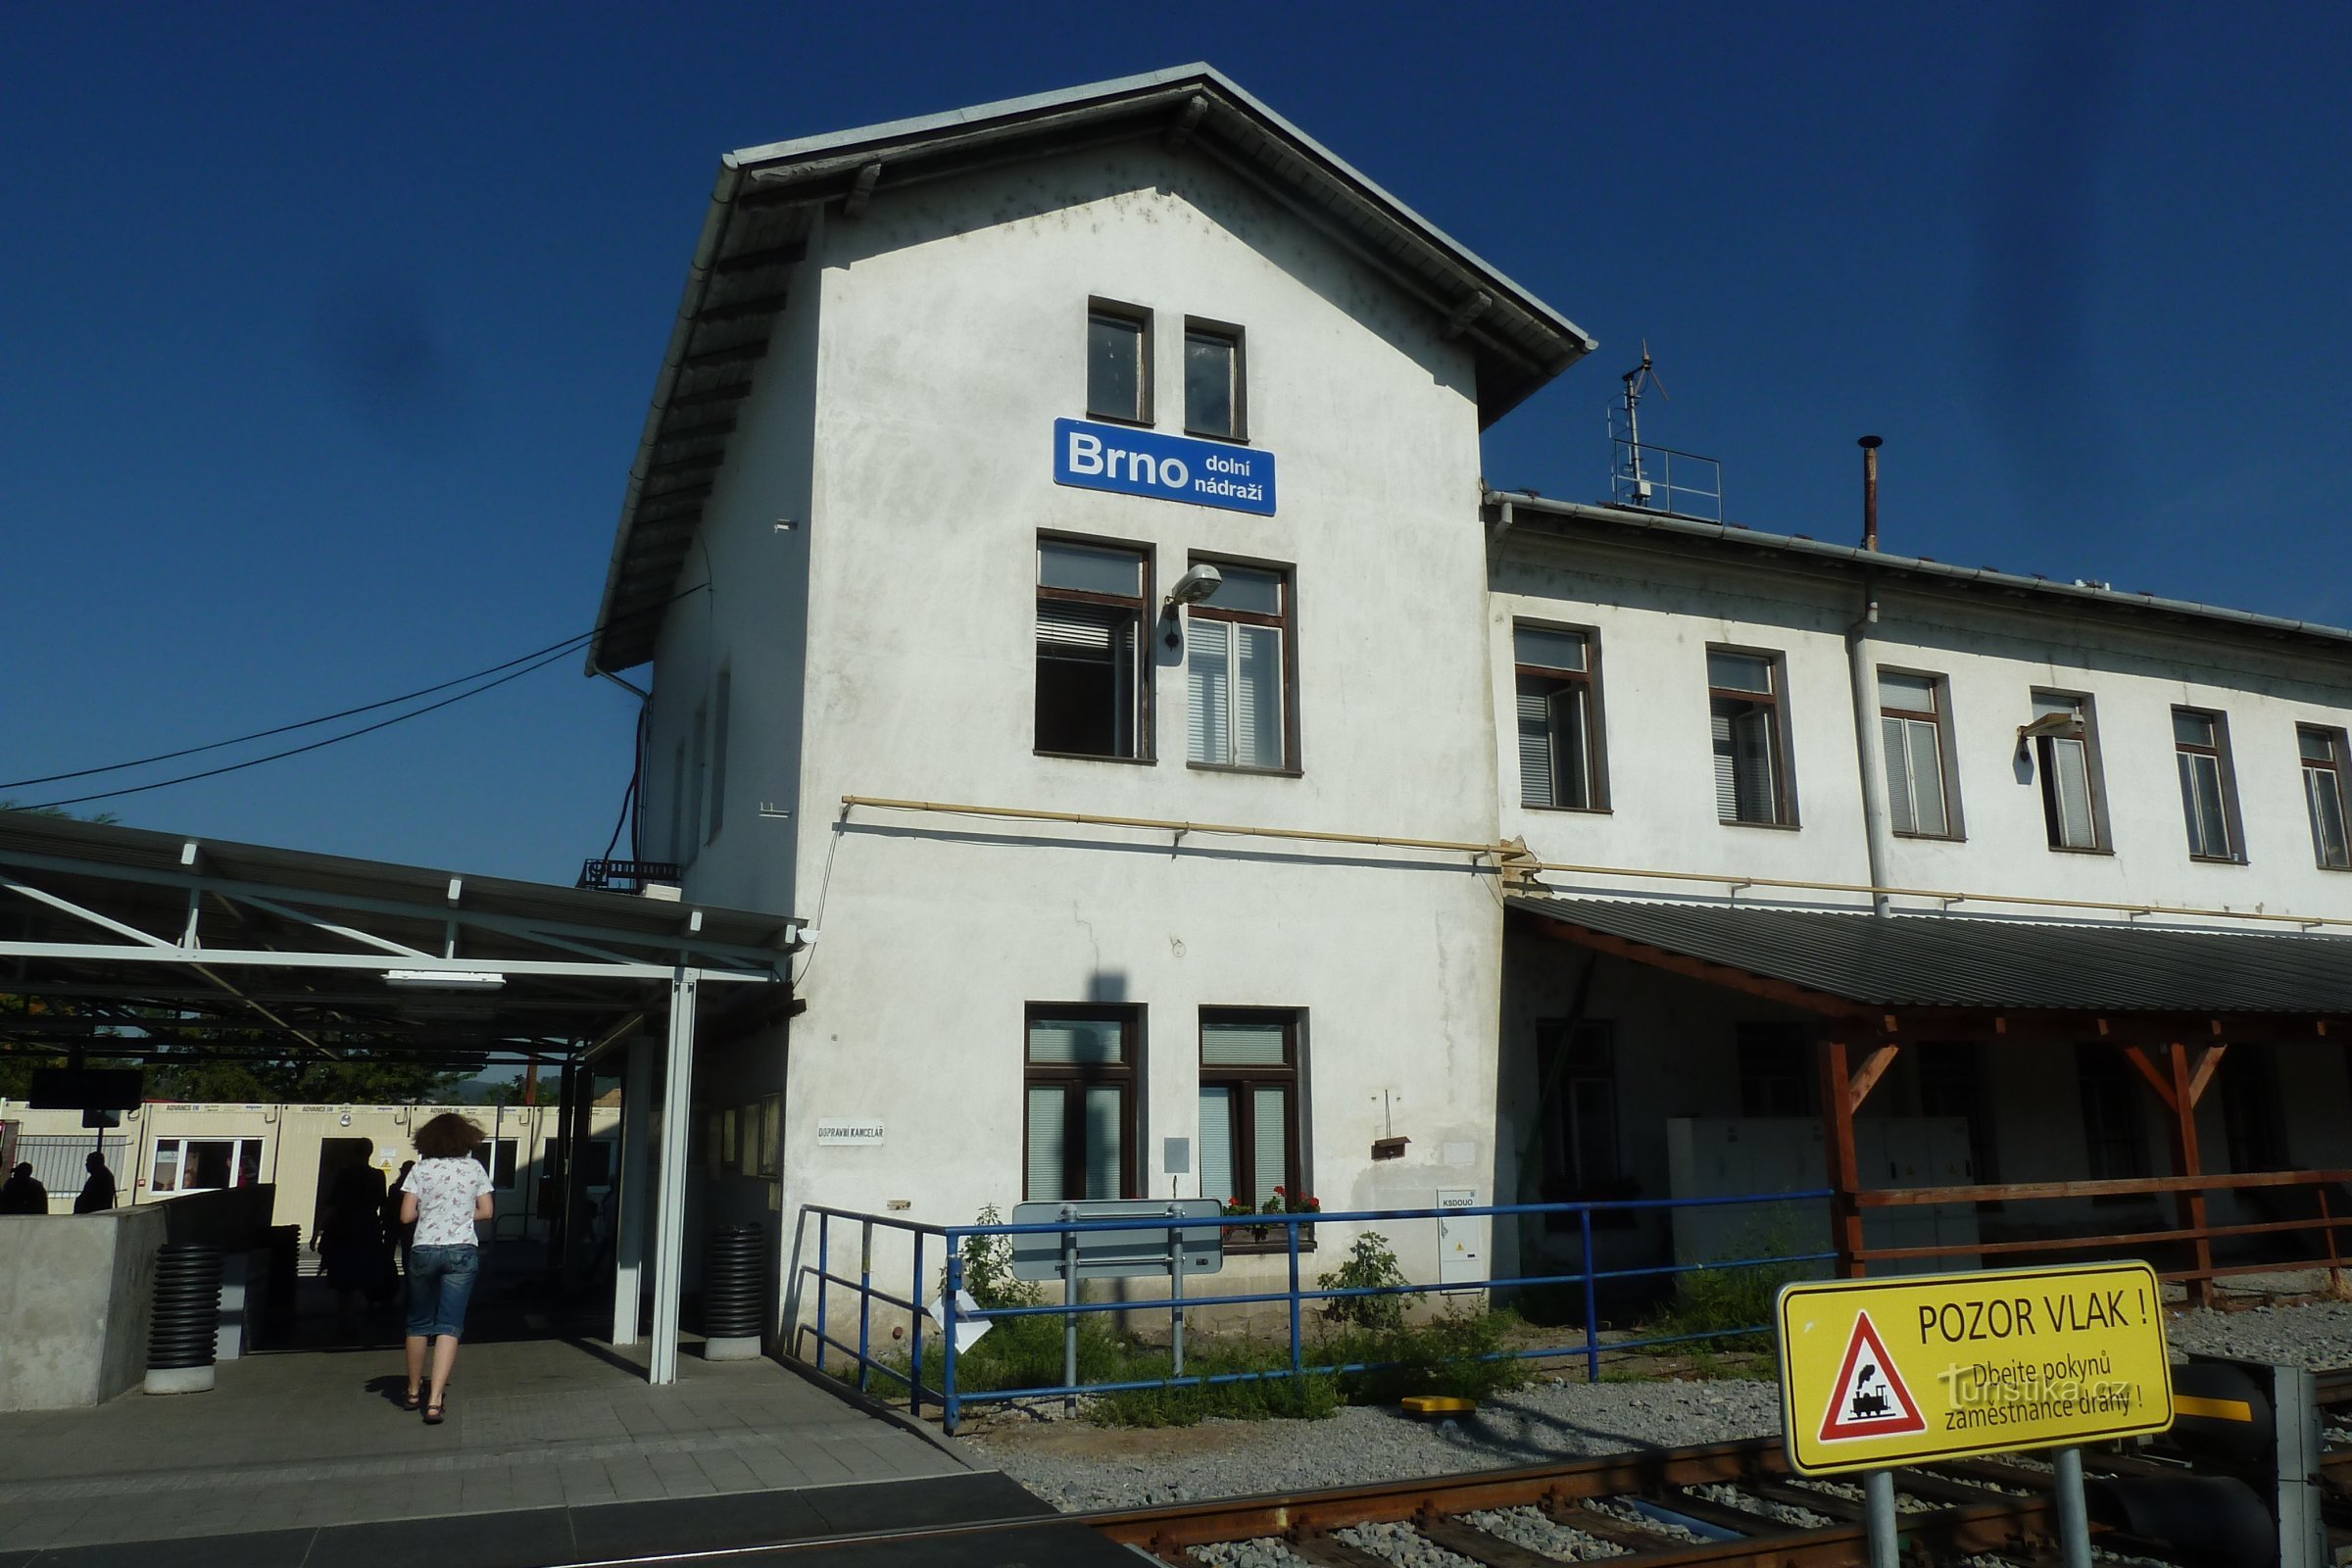 Lower station